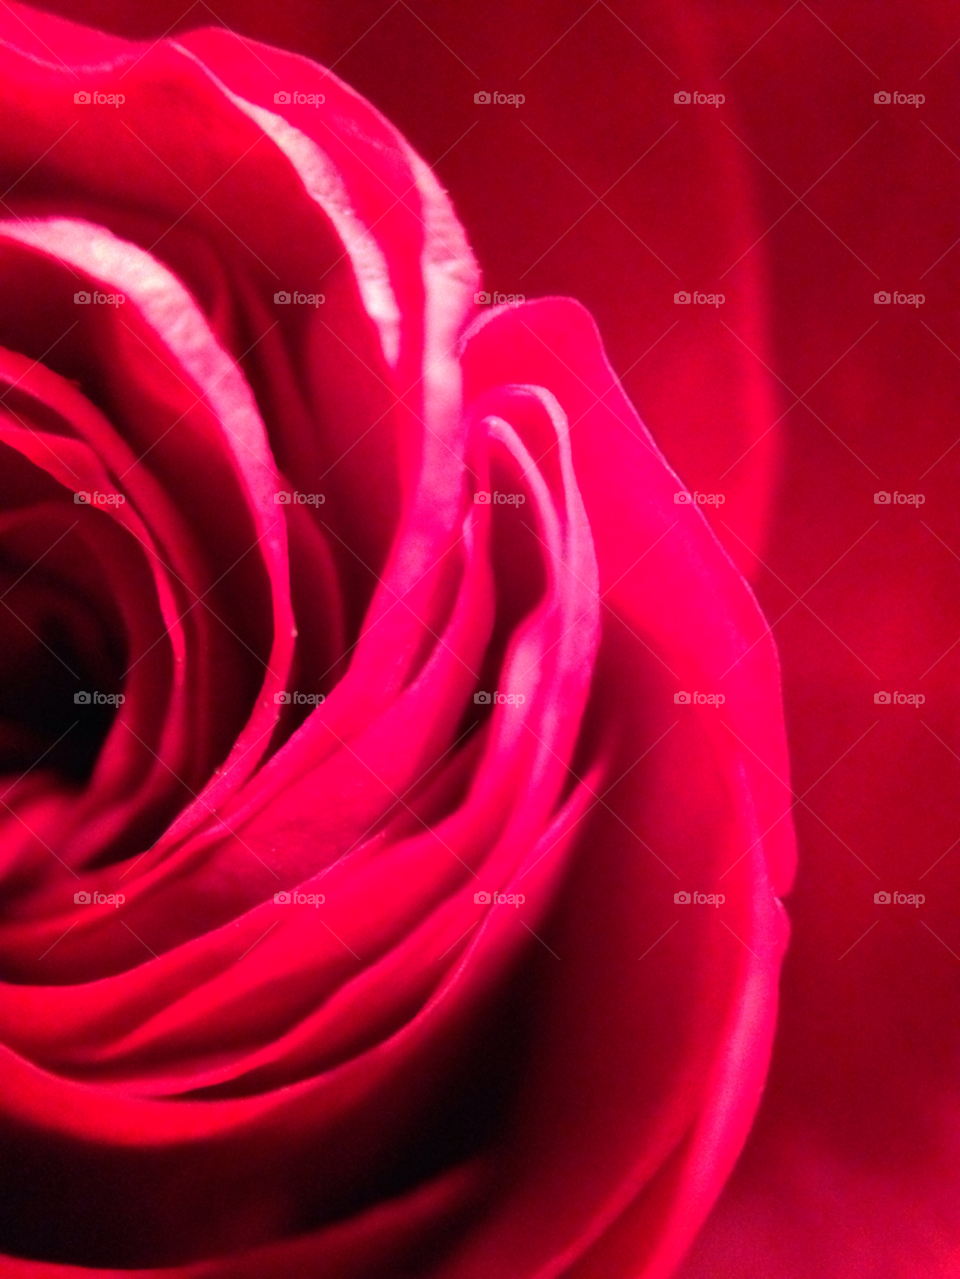 flower red blomma rose by elluca